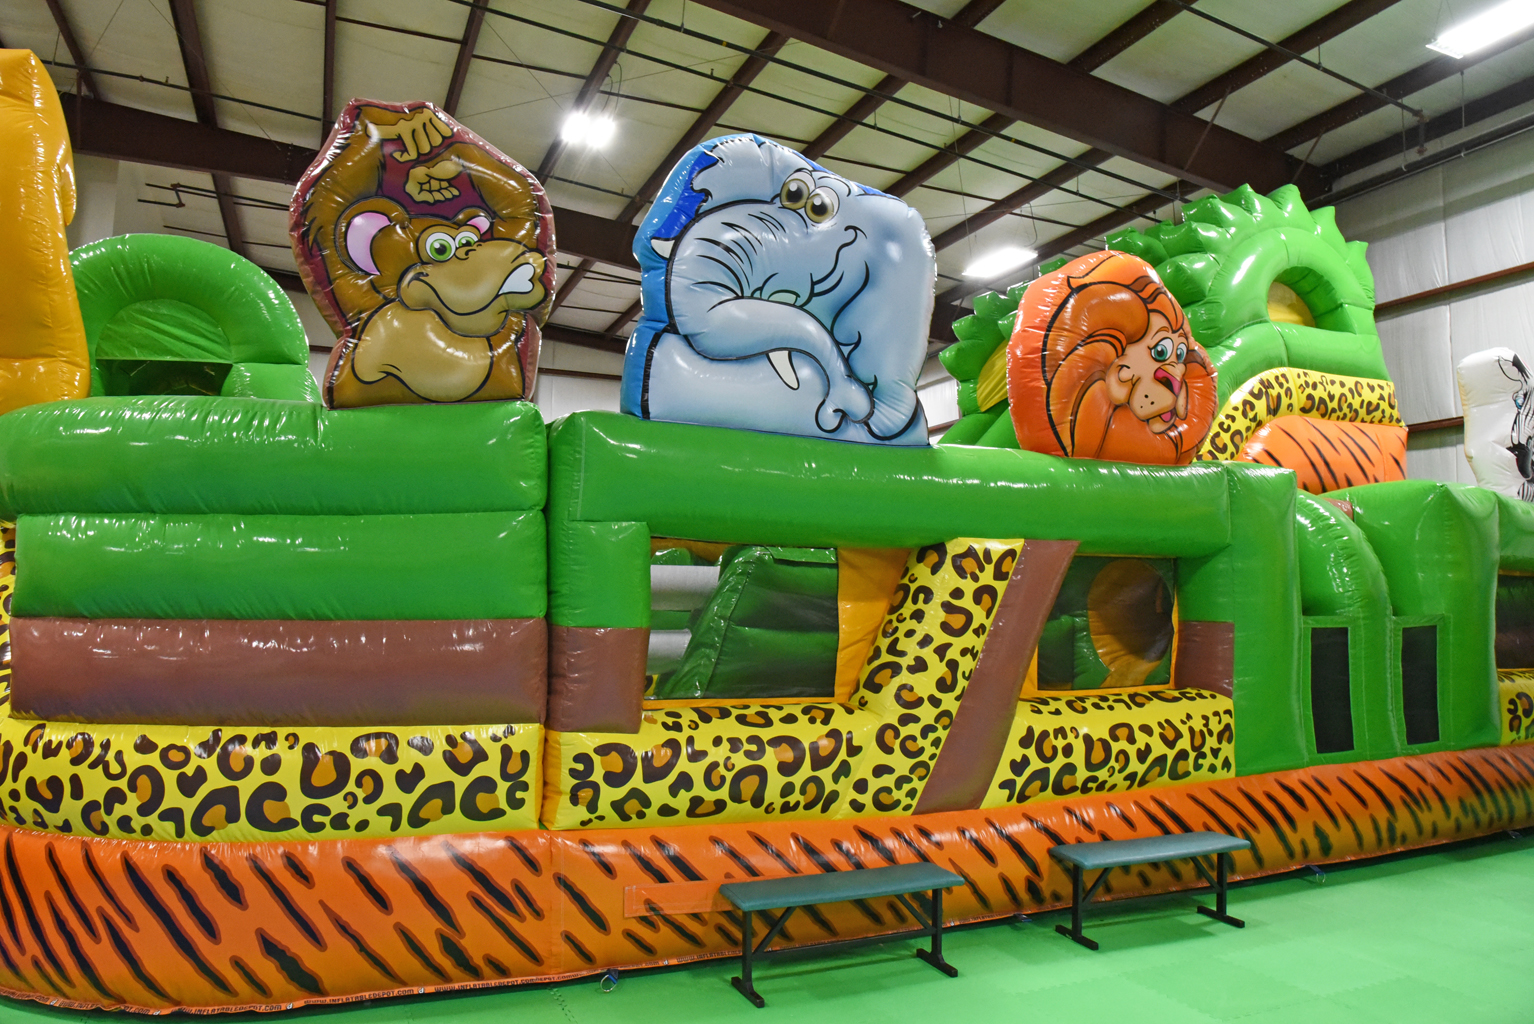 Cartoon Headquarters Inflatable Fun Zone Center